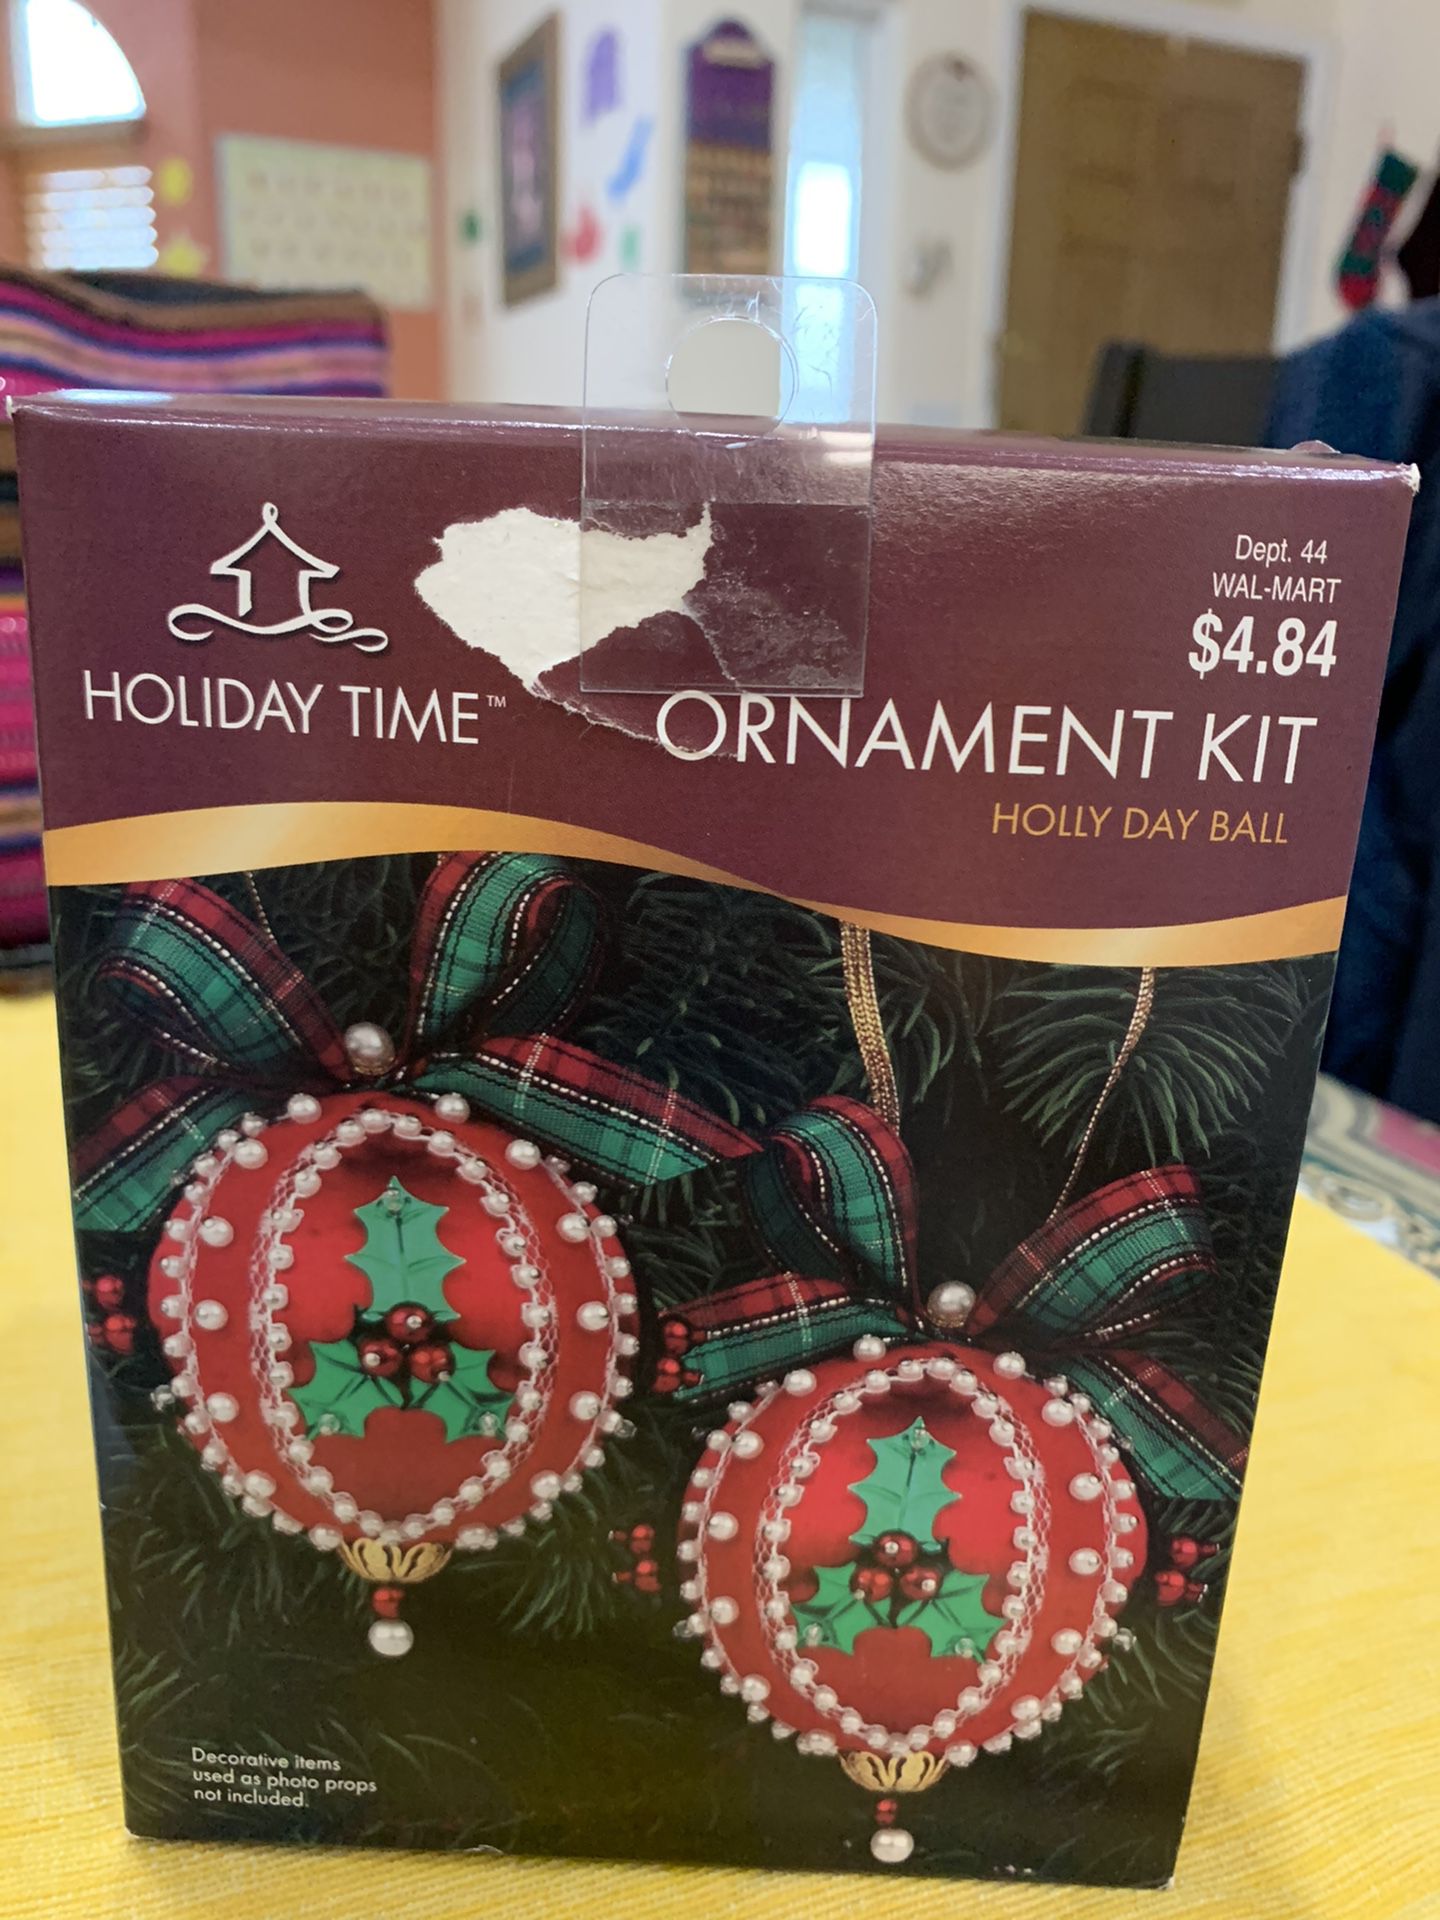 Ornament kit